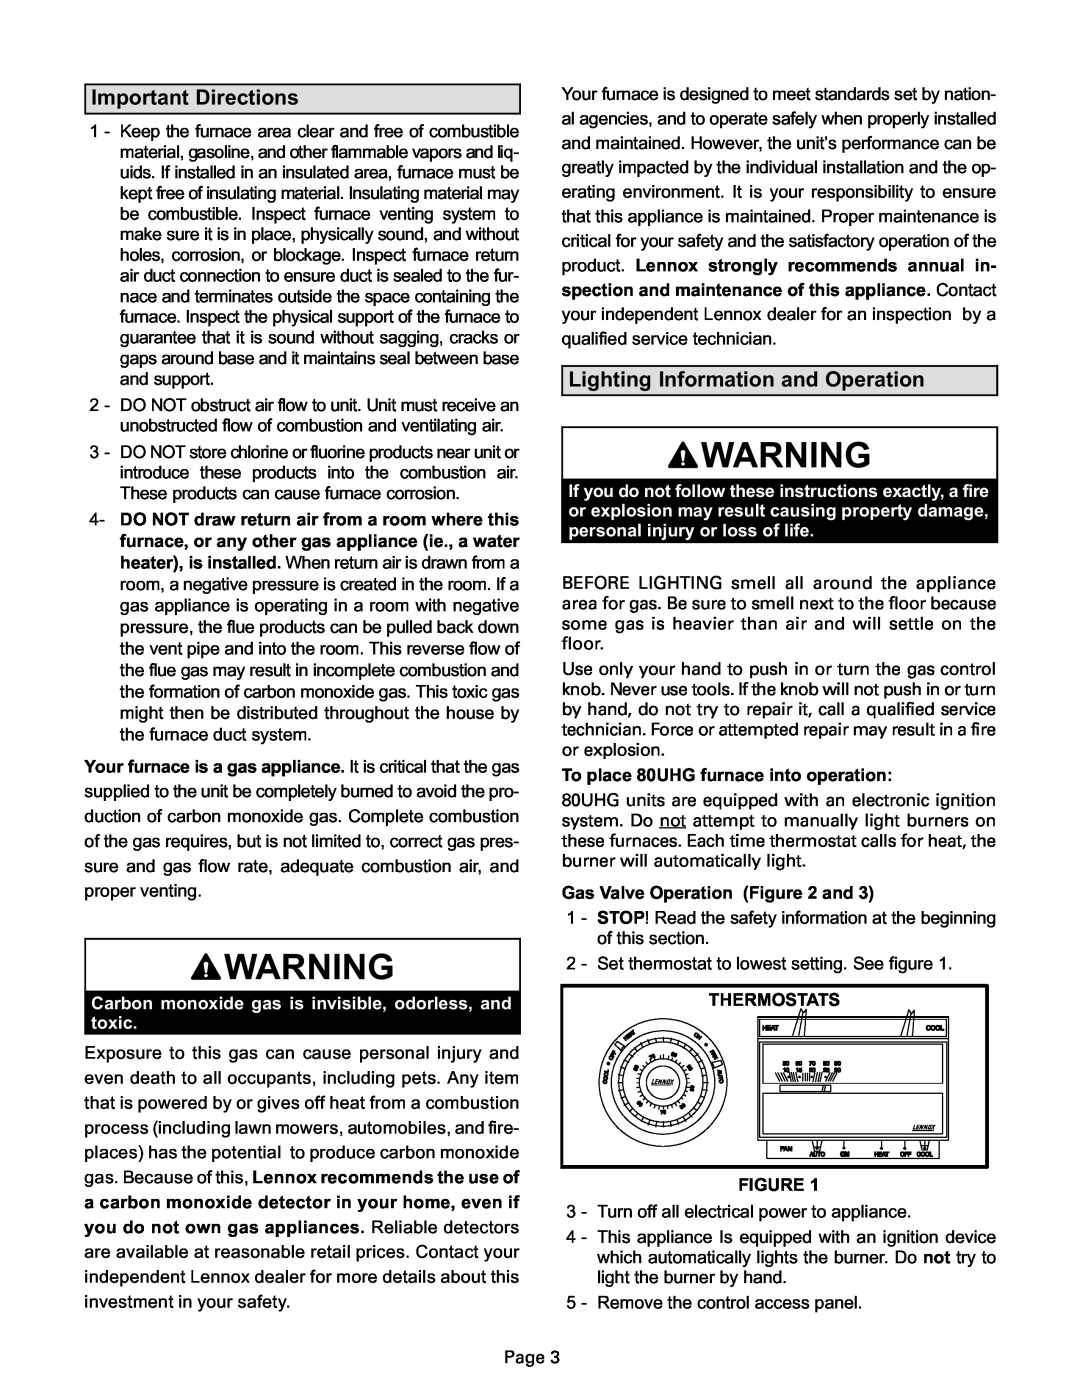 Lennox International Inc 80UHG manual Important Directions, Lighting Information and Operation 